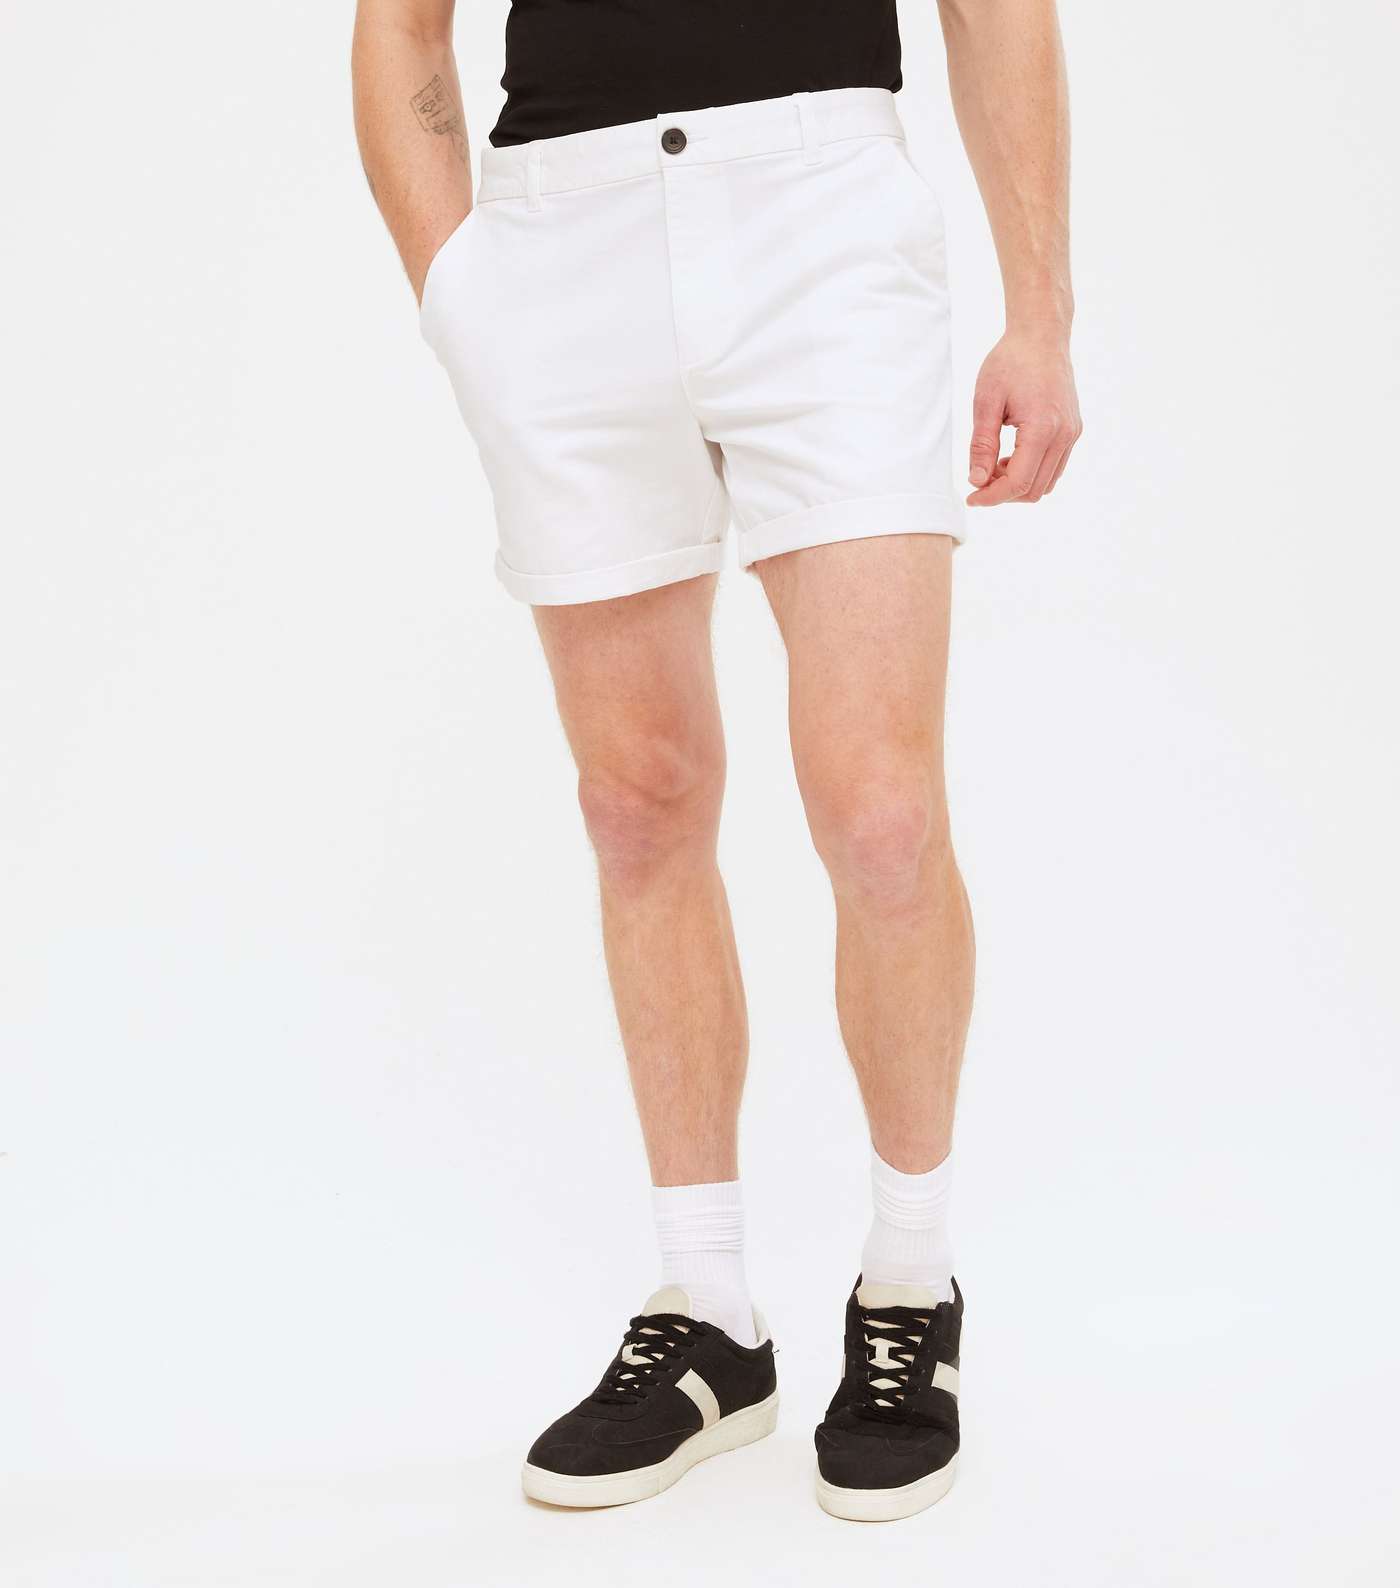 White Thigh Length Chino Shorts Image 2